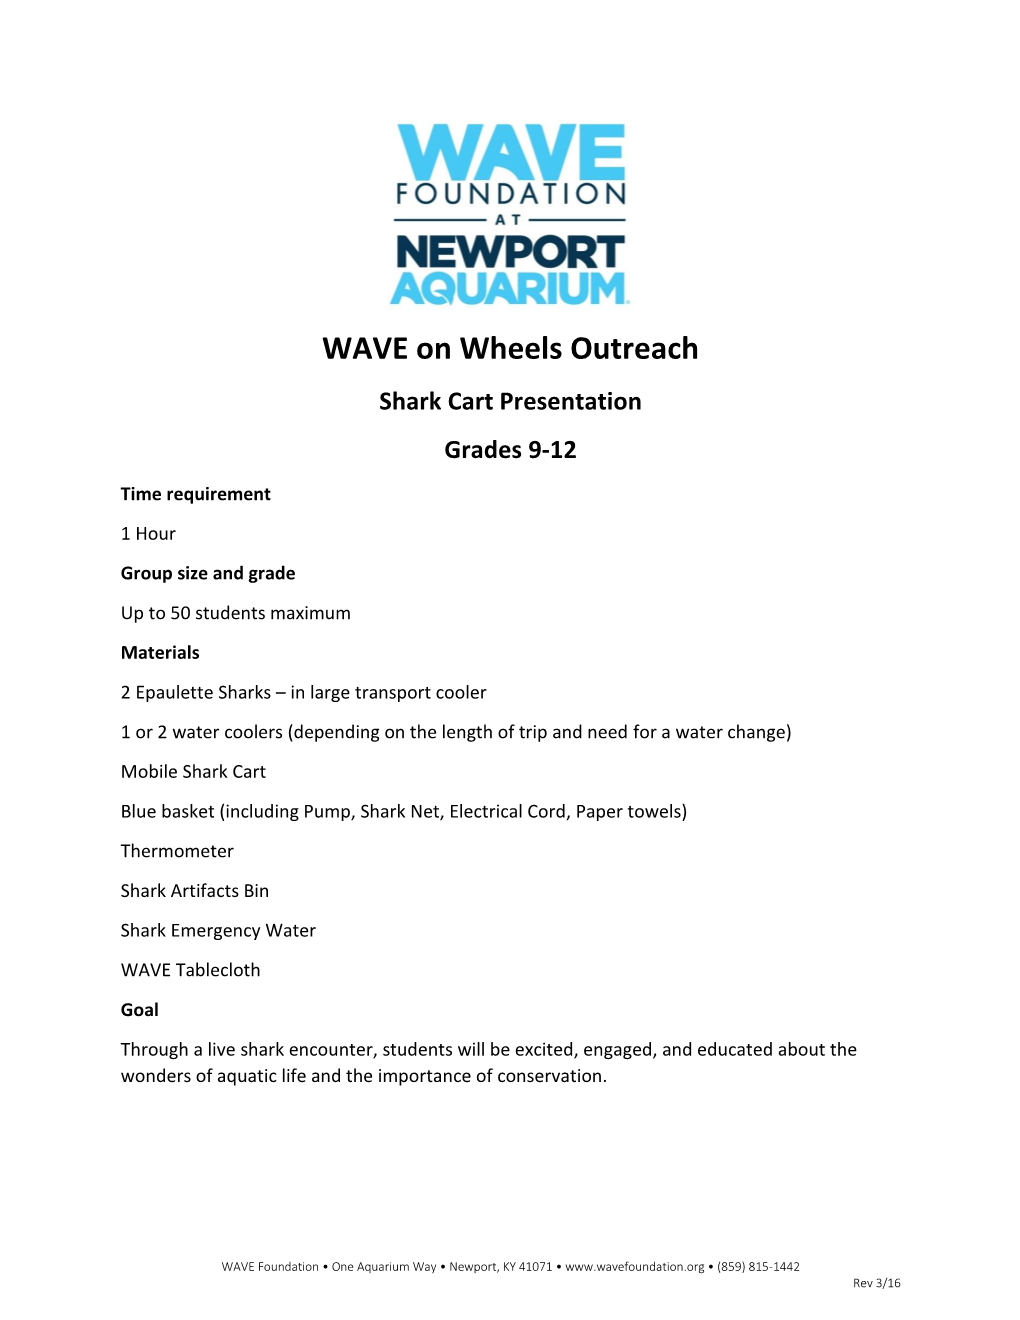 WAVE on Wheels Outreach Shark Cart Presentation Grades 9-12